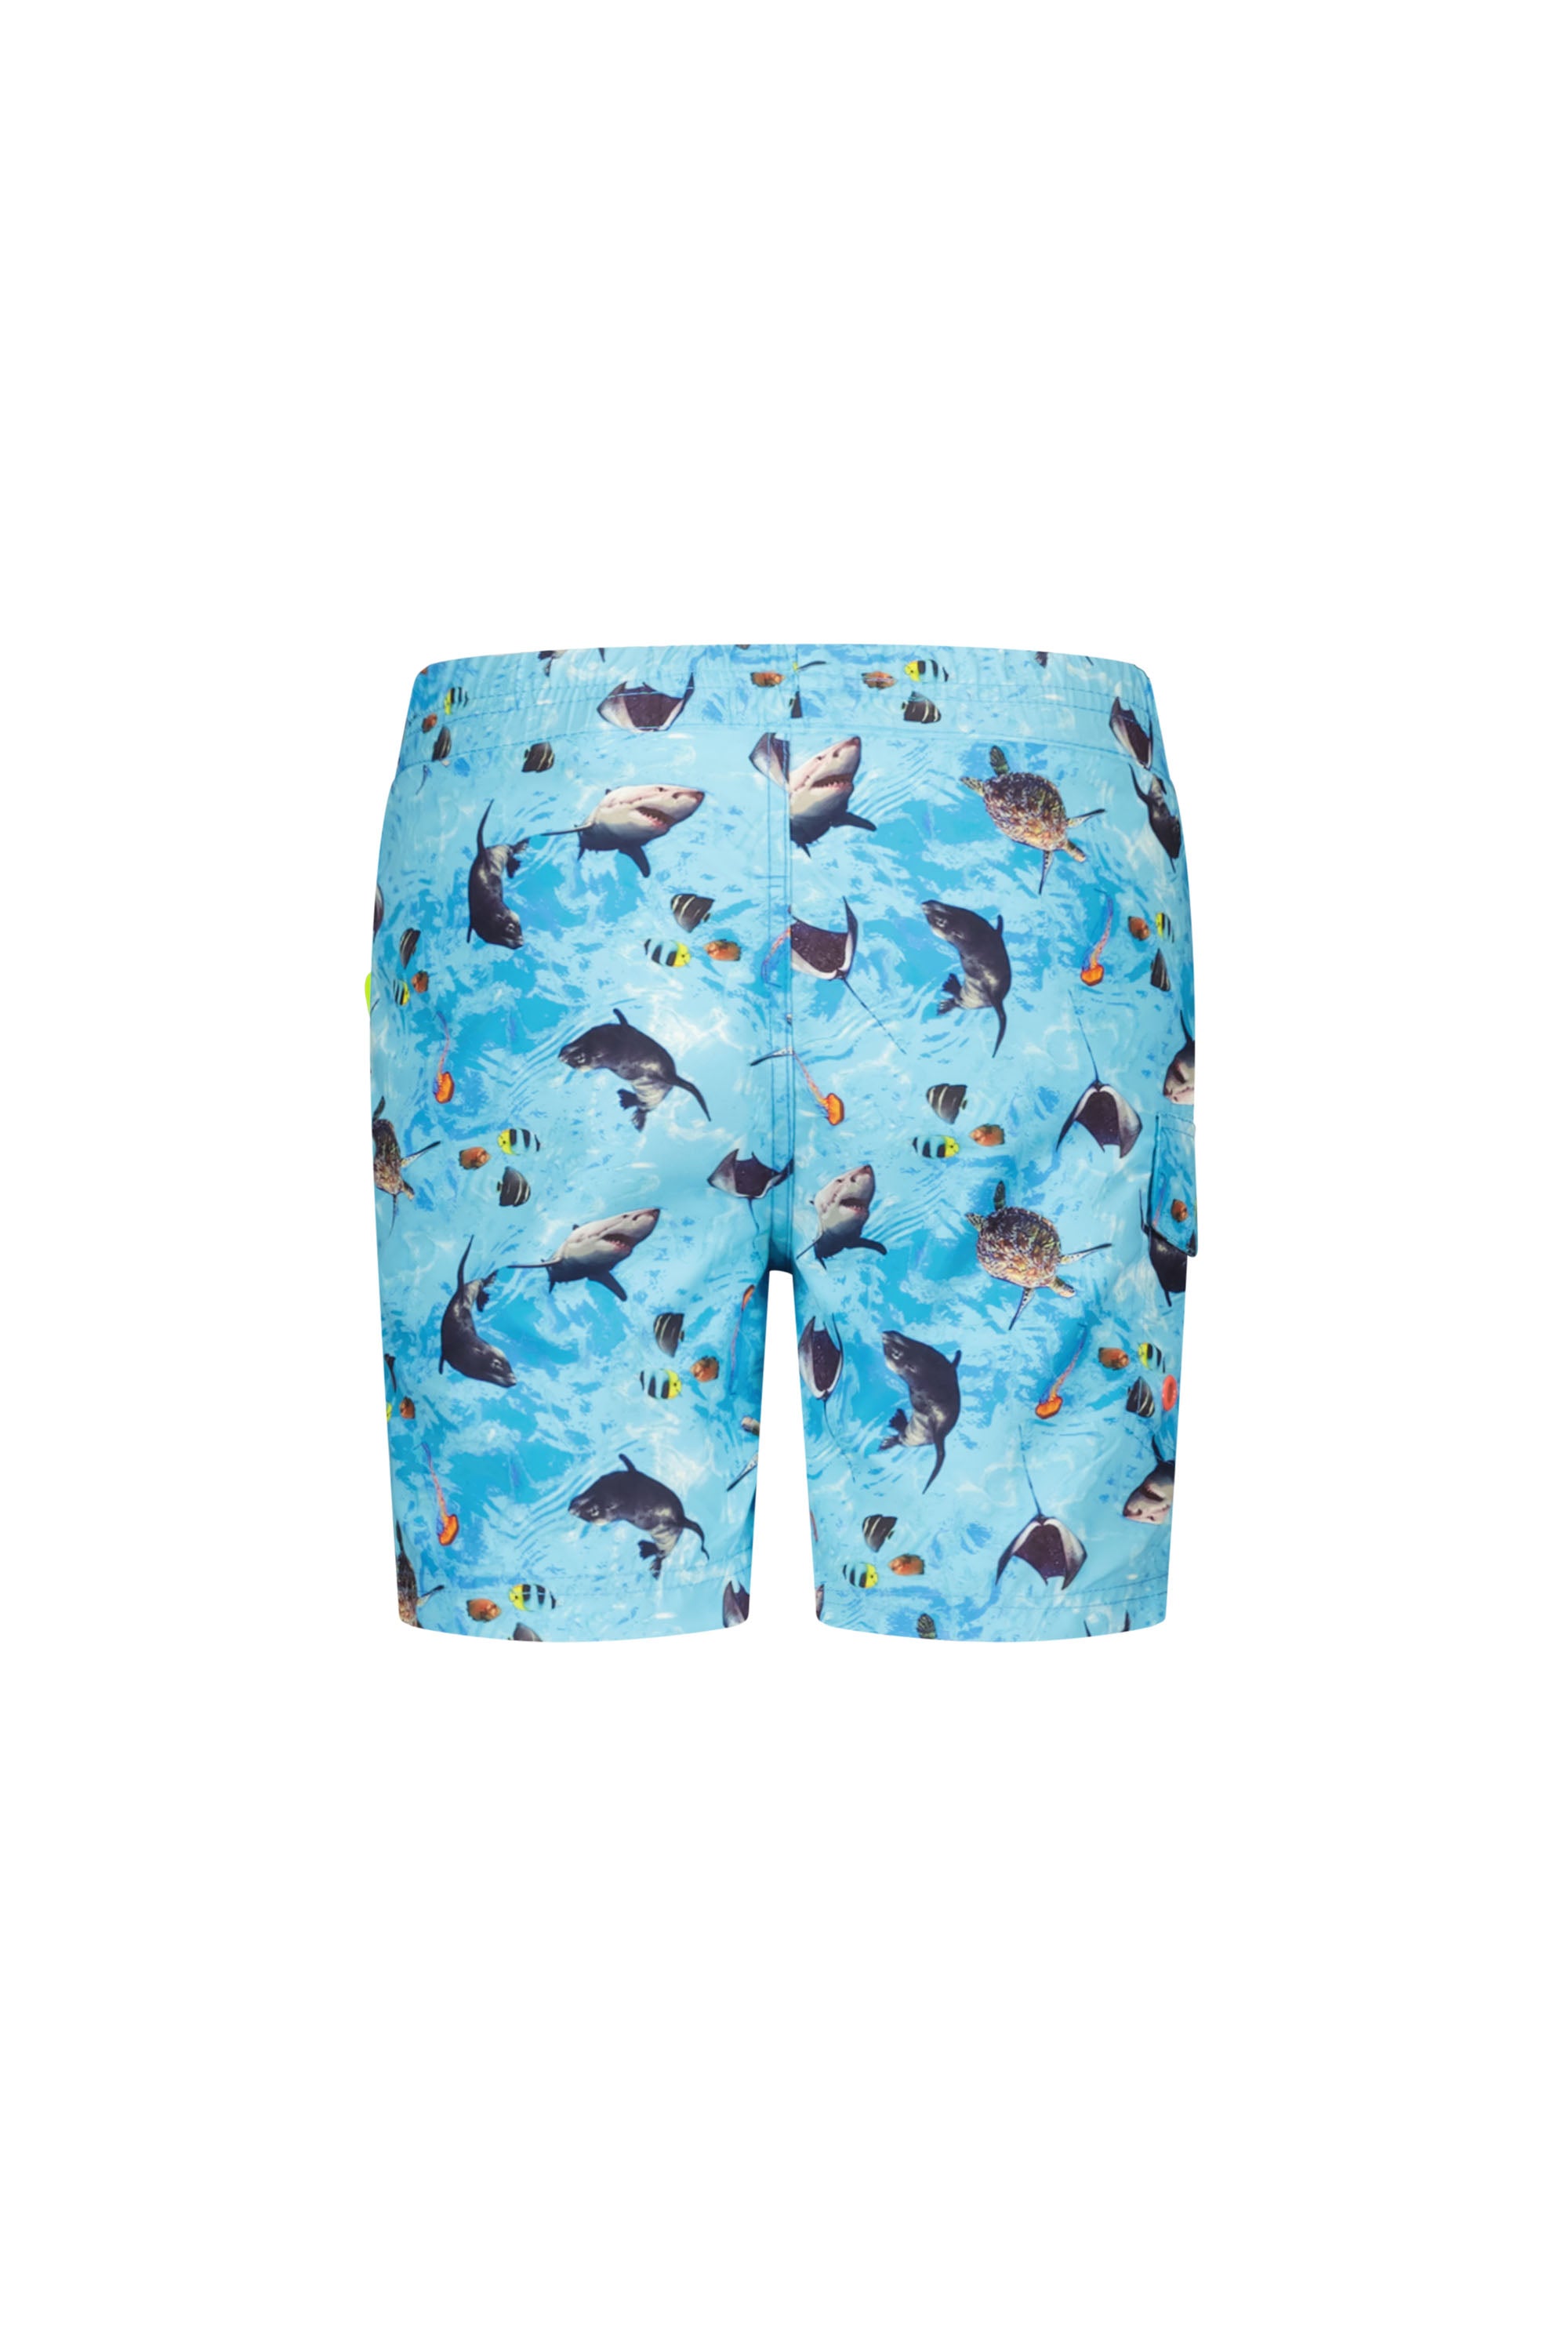 Just Beach Boys woven tropical shark swim shorts